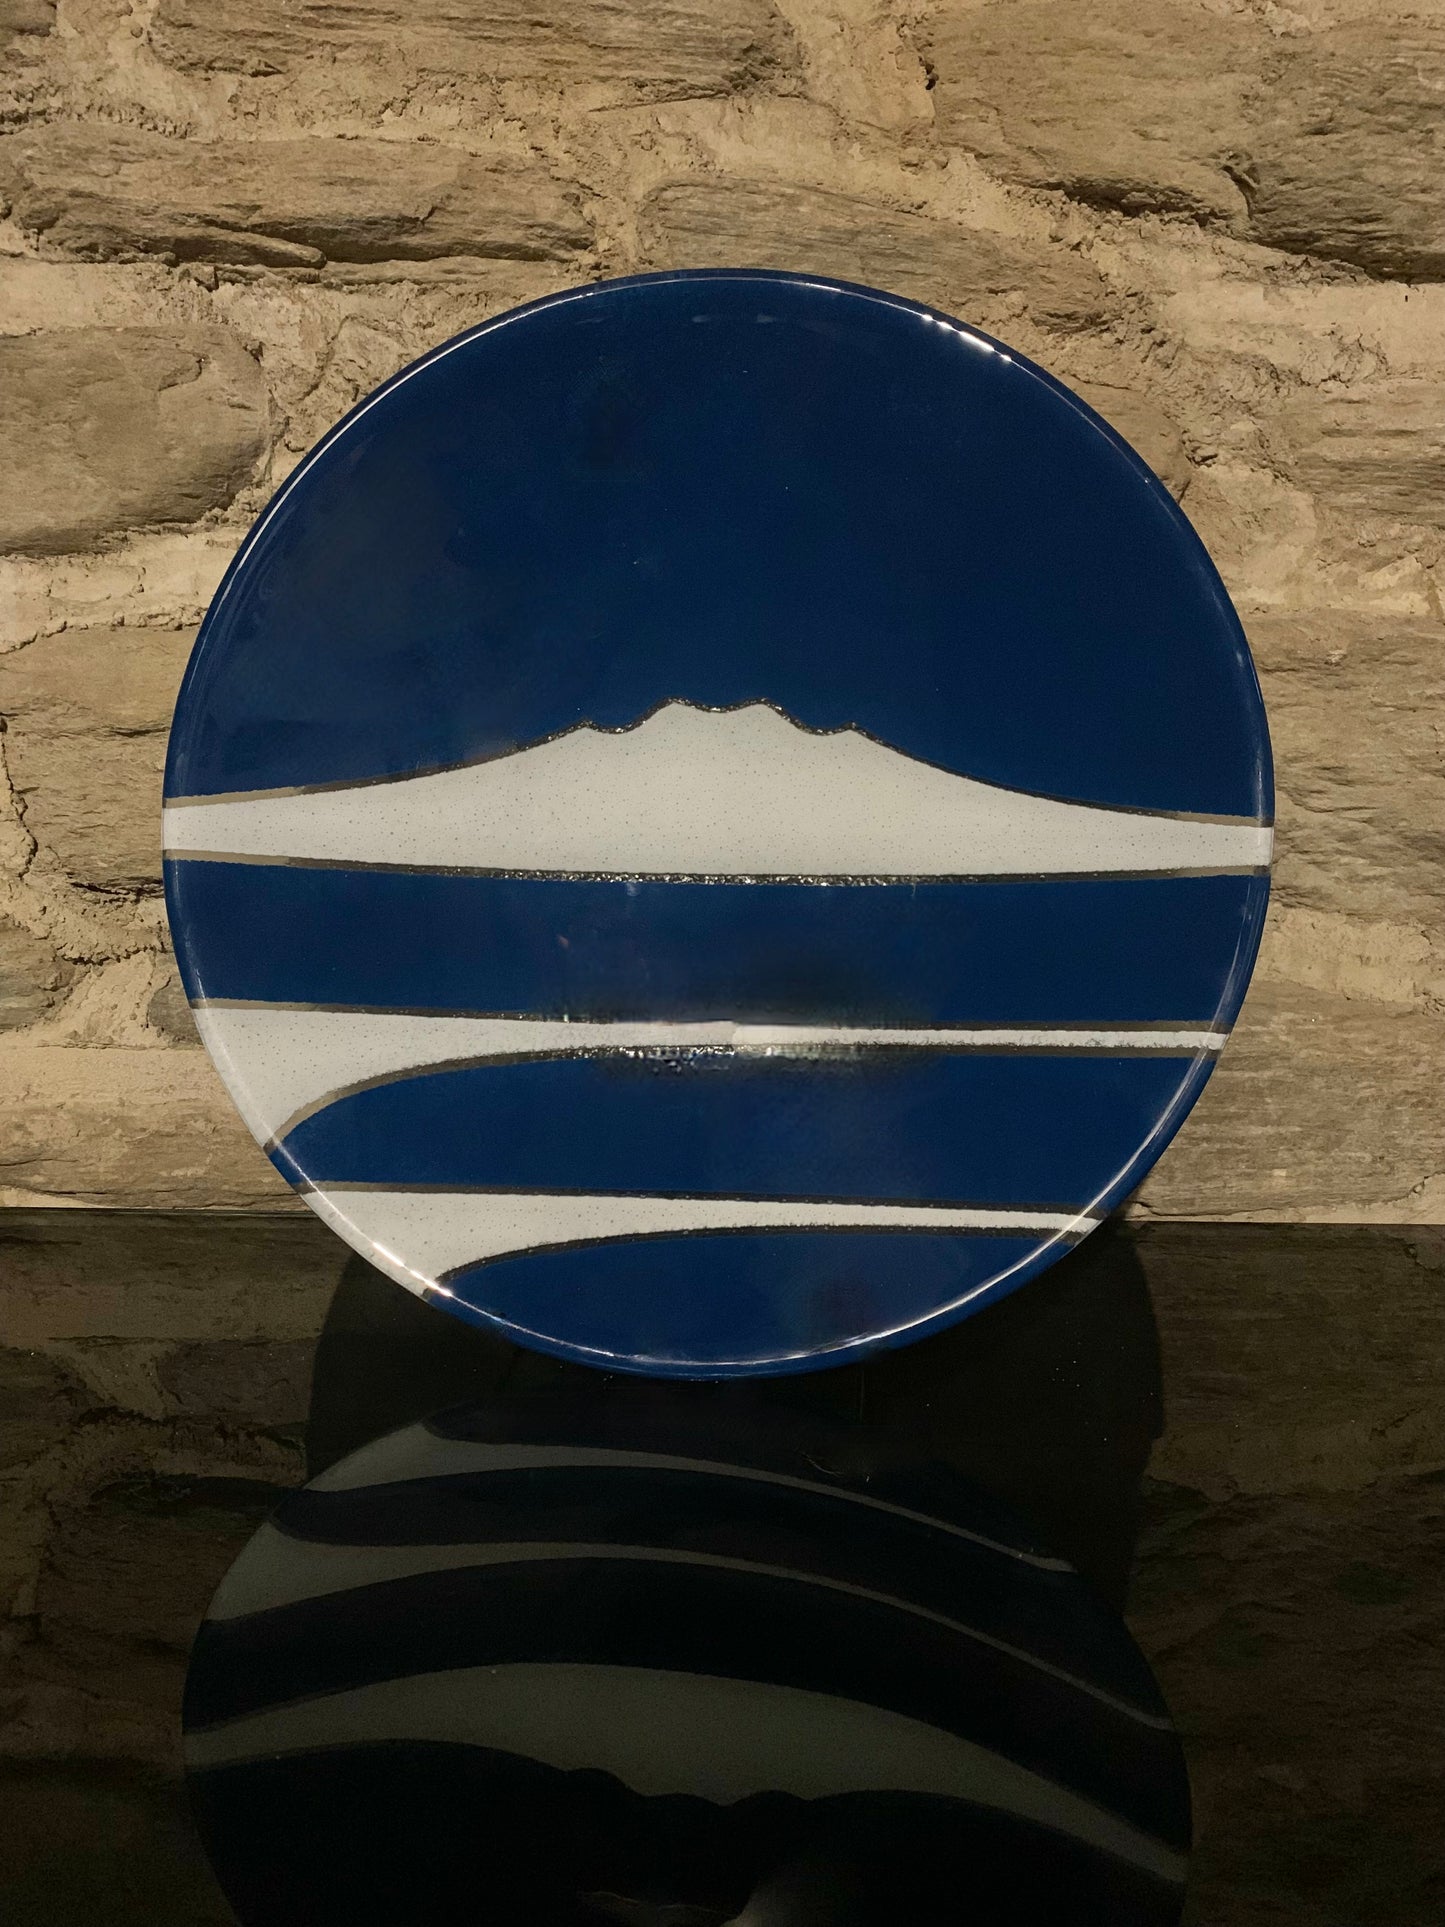 Fused Glass Bowl by Maori Boy - Te Maunga (mountain) Design (teal and white) 40cm